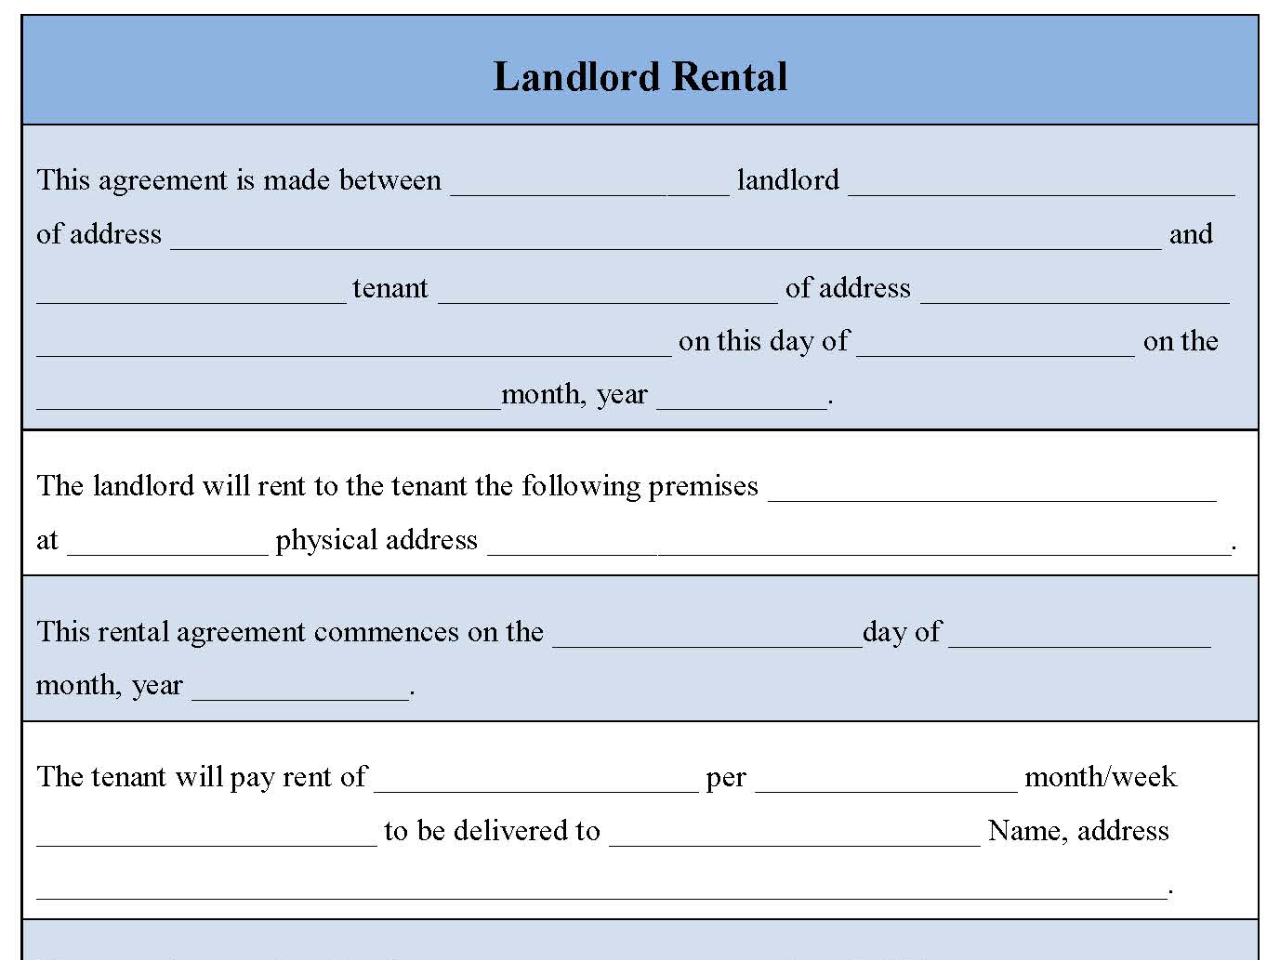 Landlord Rental Template